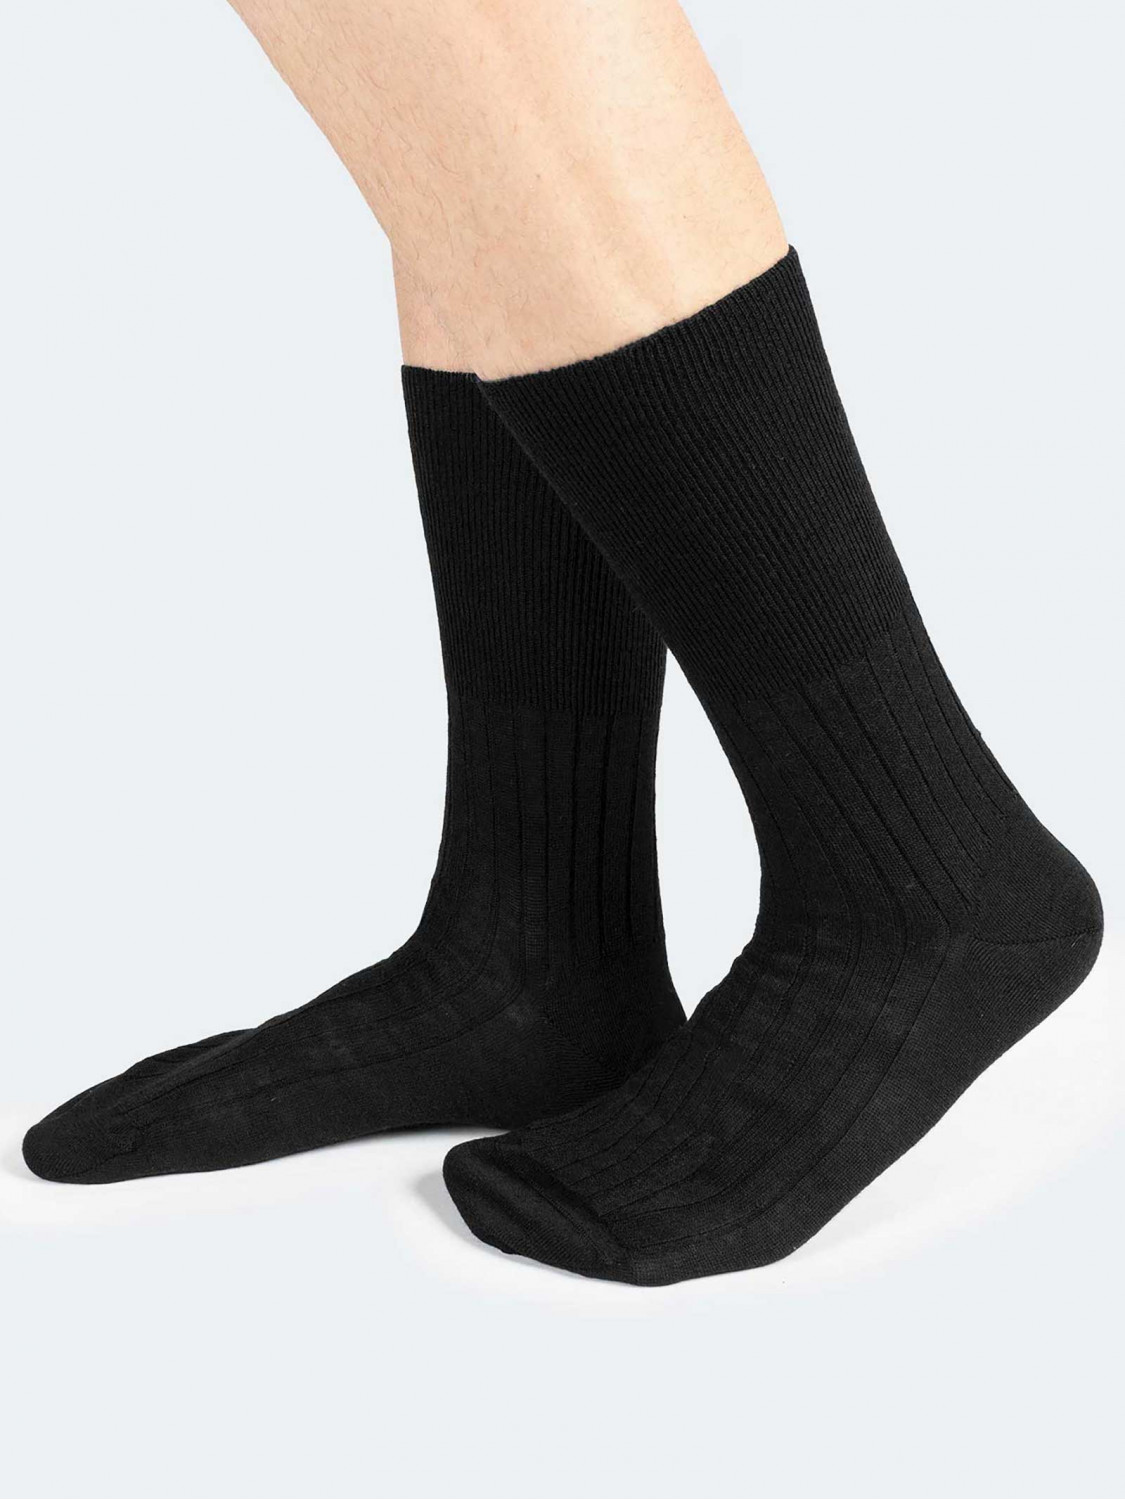 Wide rib wool calf socks - Made in Italy